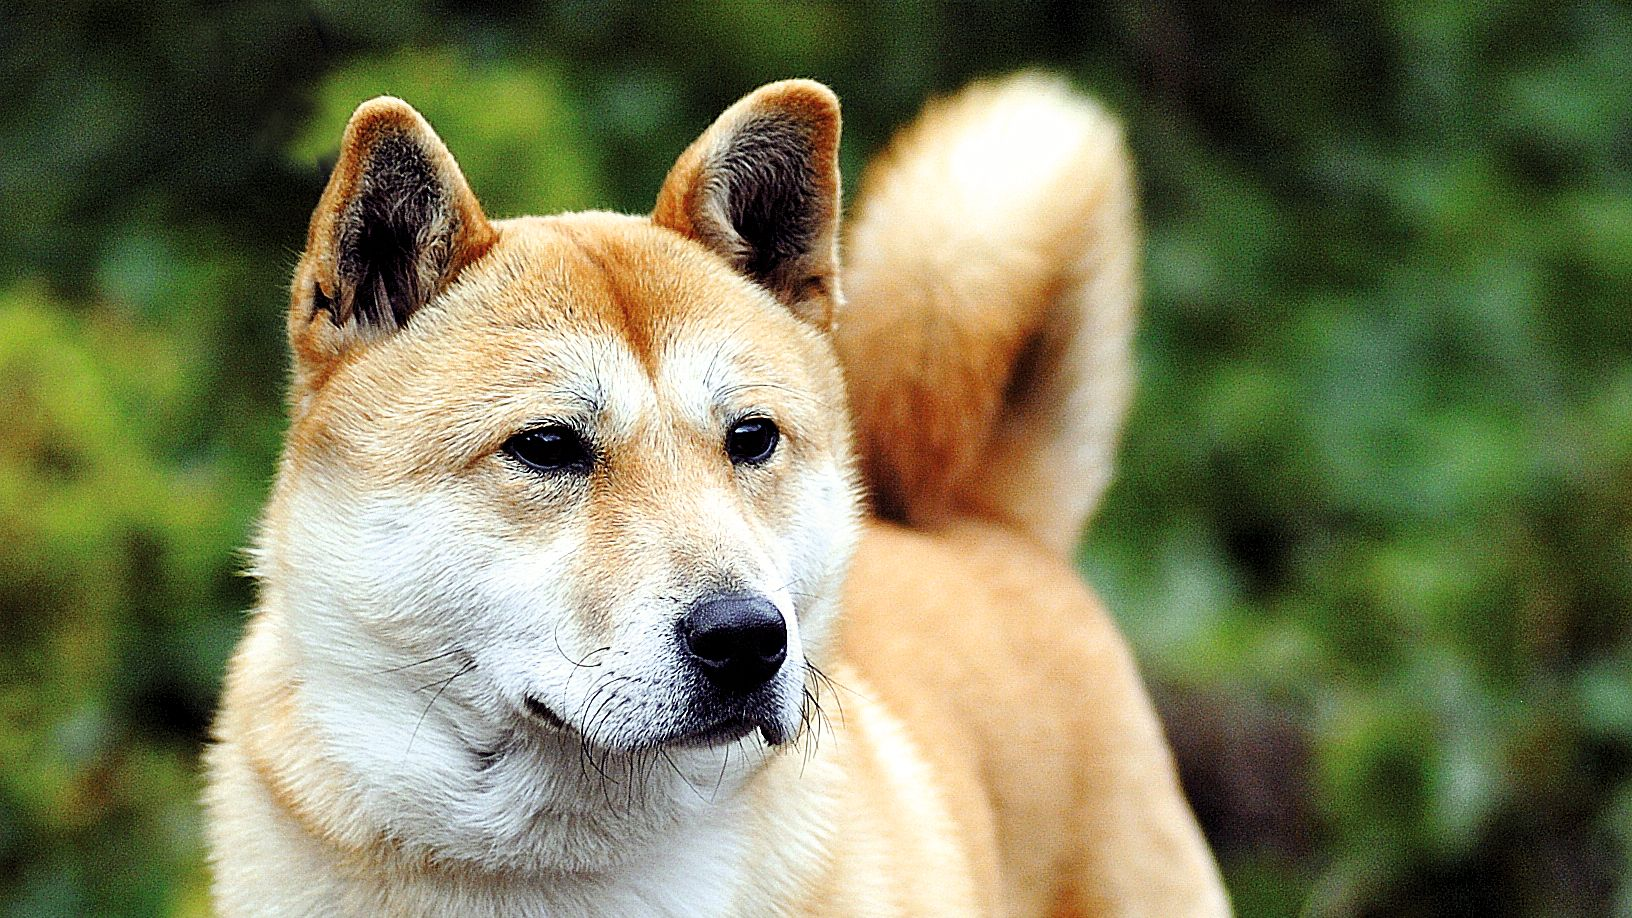 Korean Jingo Dog stood alert in front of a bush